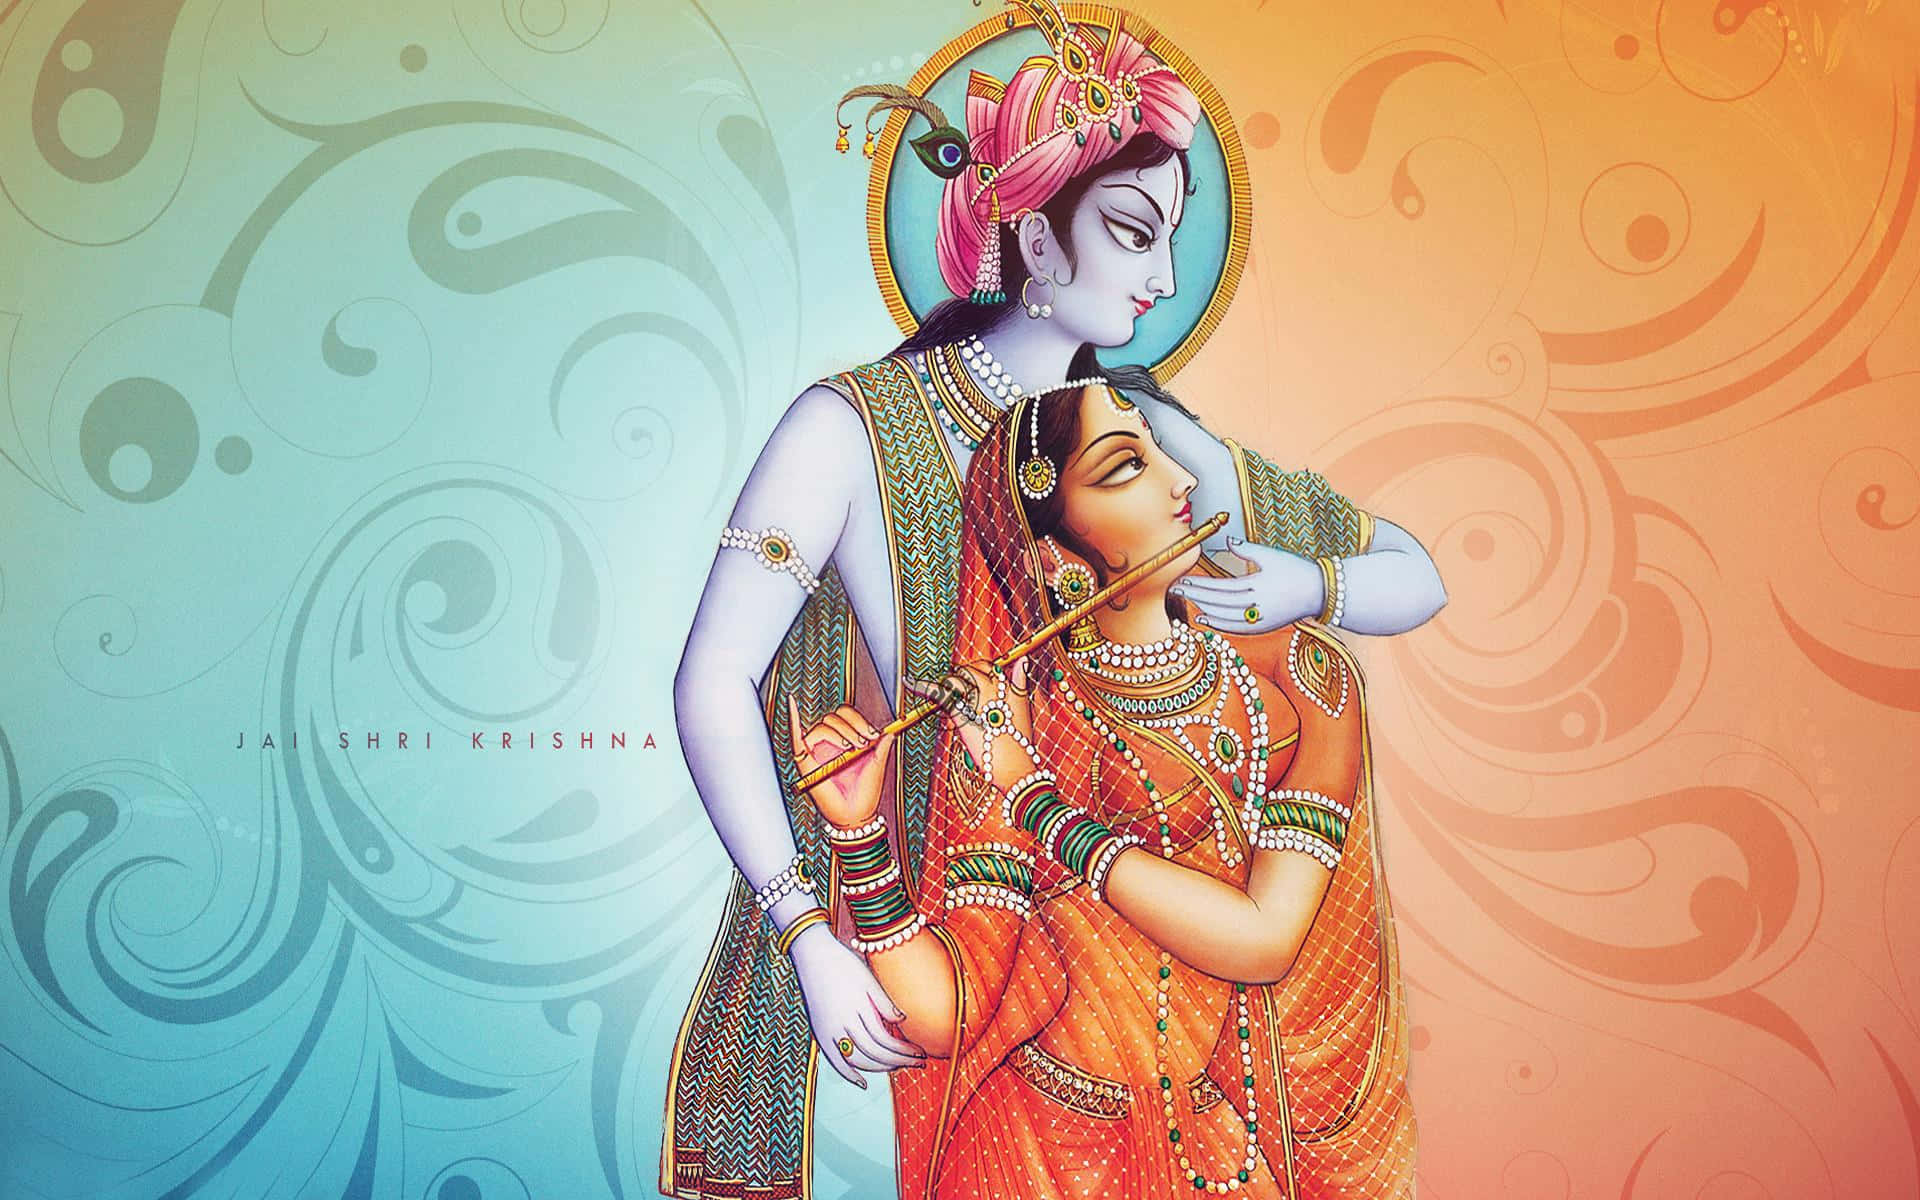 "Eternal Love - A Radiant Depiction of Radha Krishna"